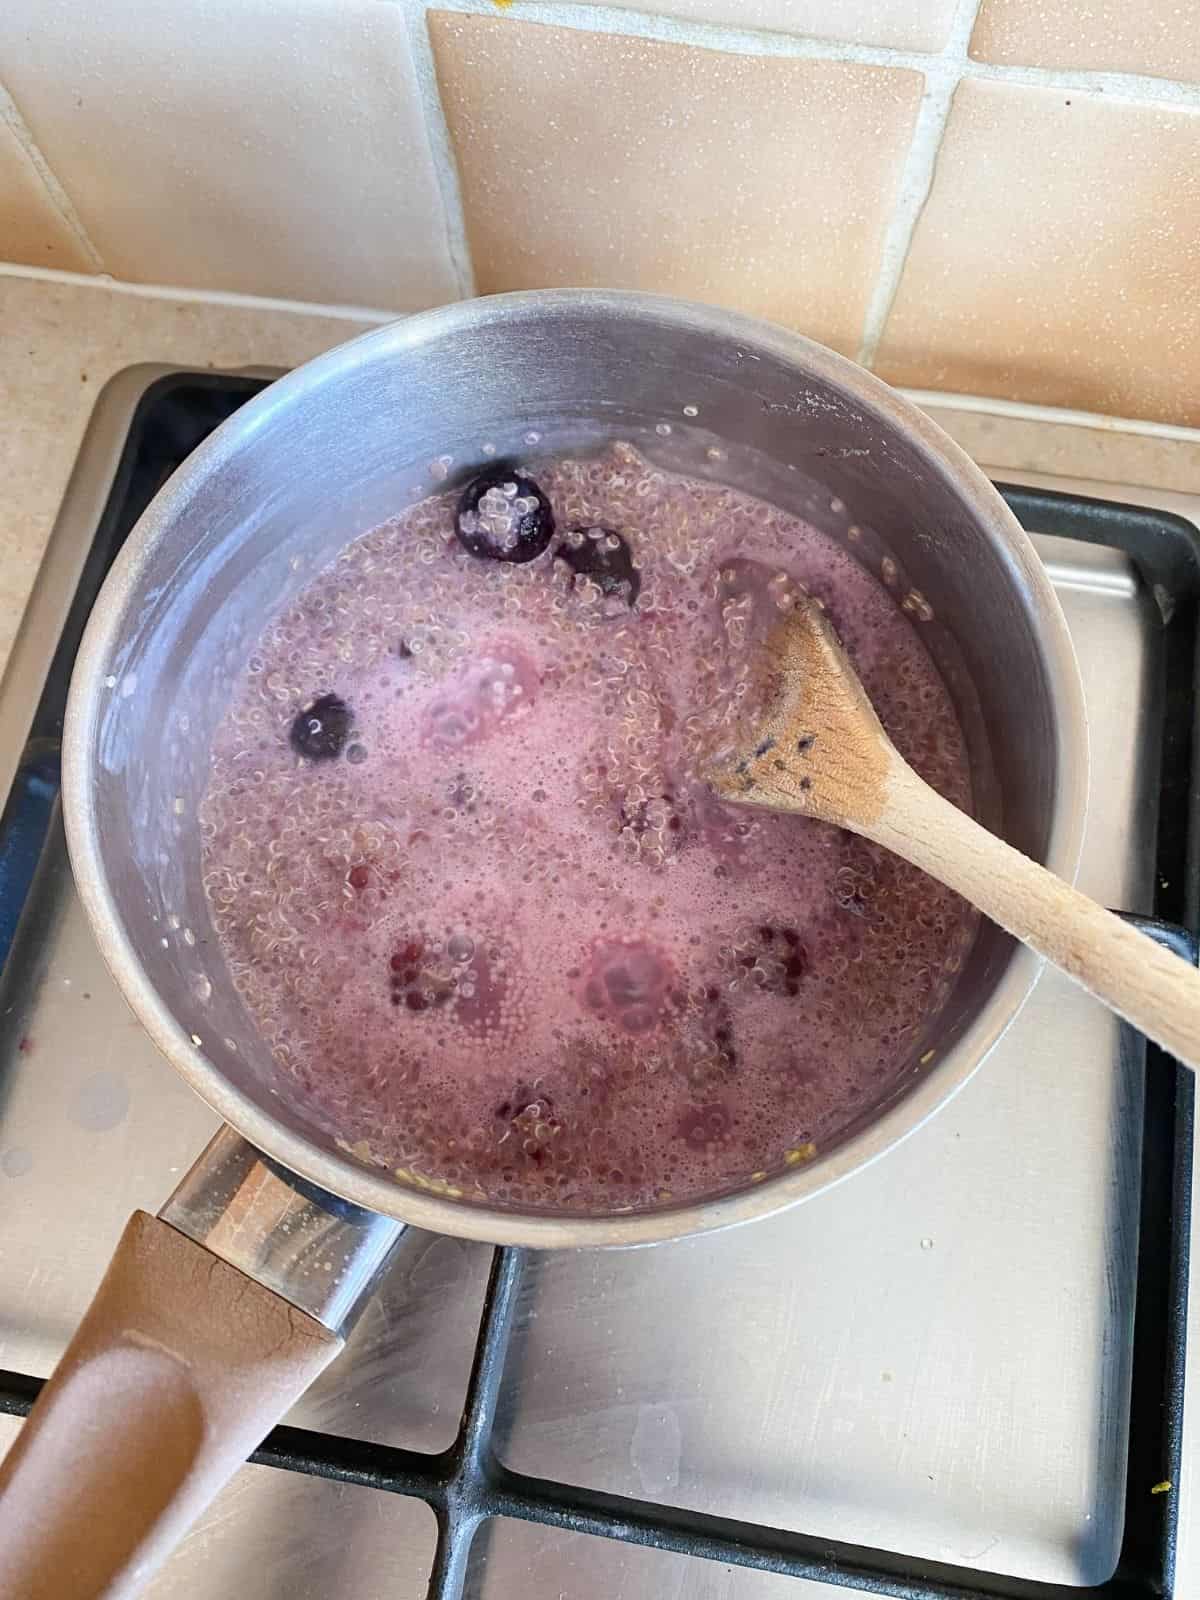 blackberry quinoa porridge cooking in a pan on a stove top.